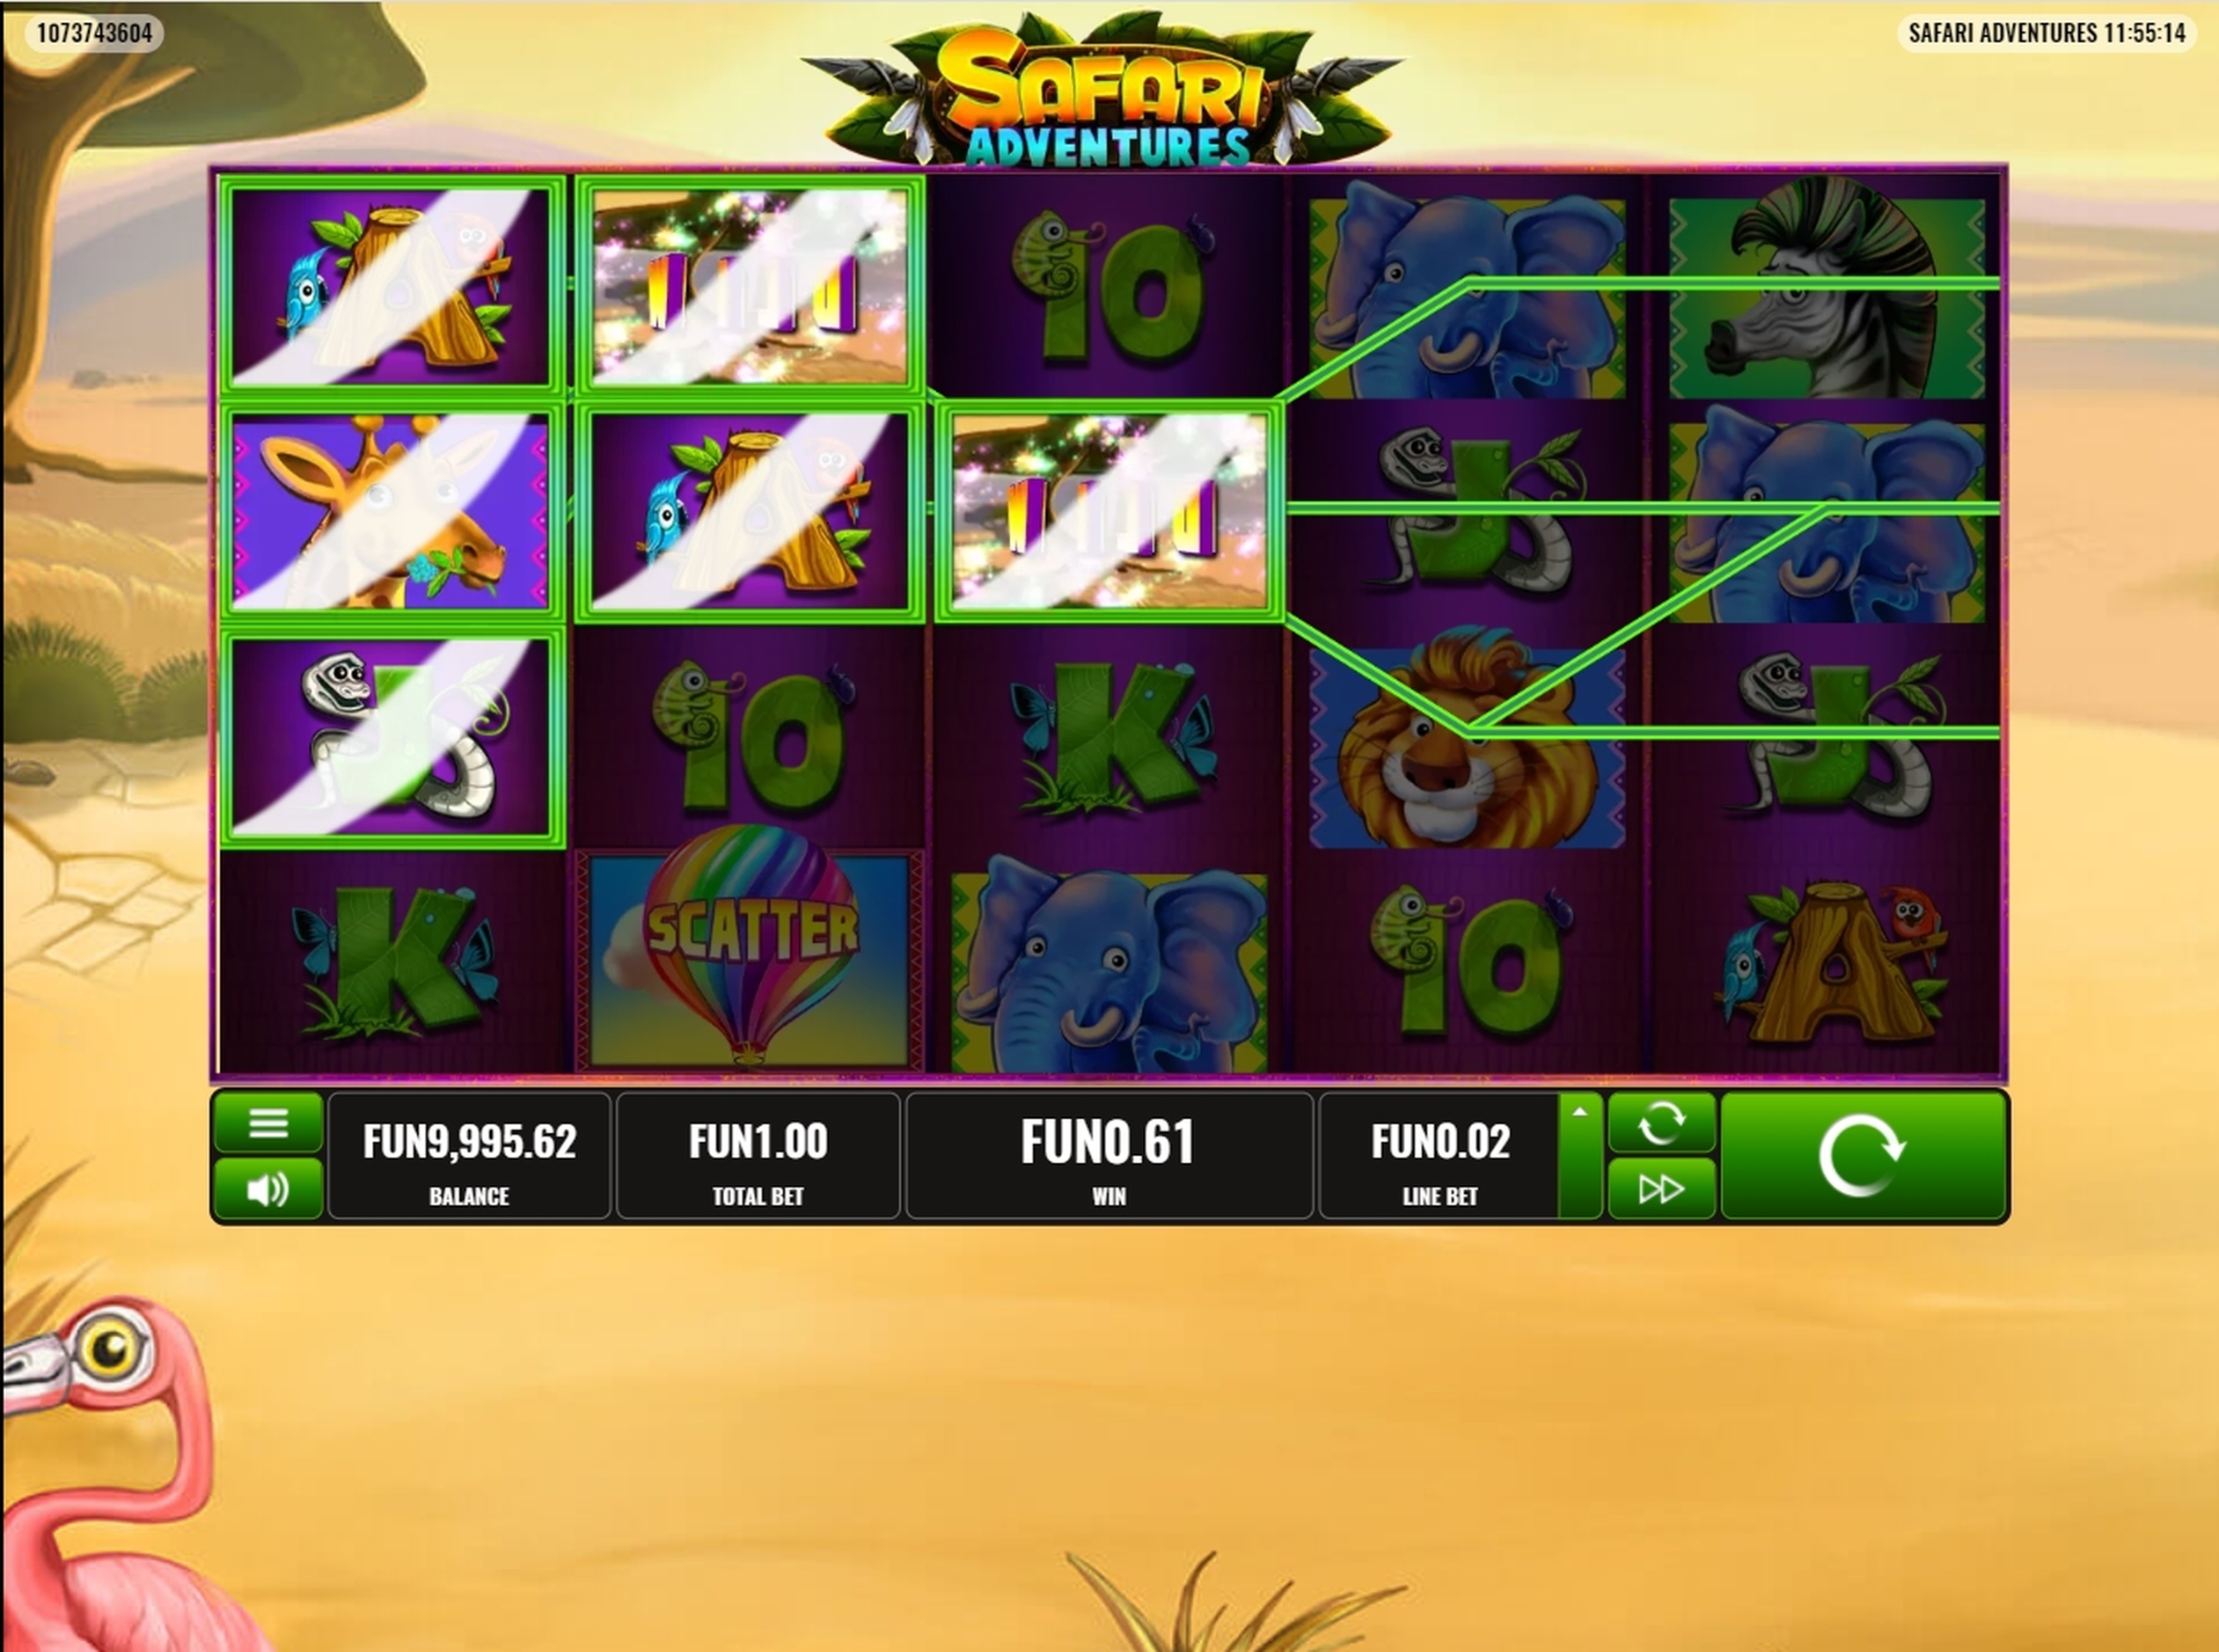 Win Money in Safari Adventures Free Slot Game by Platipus